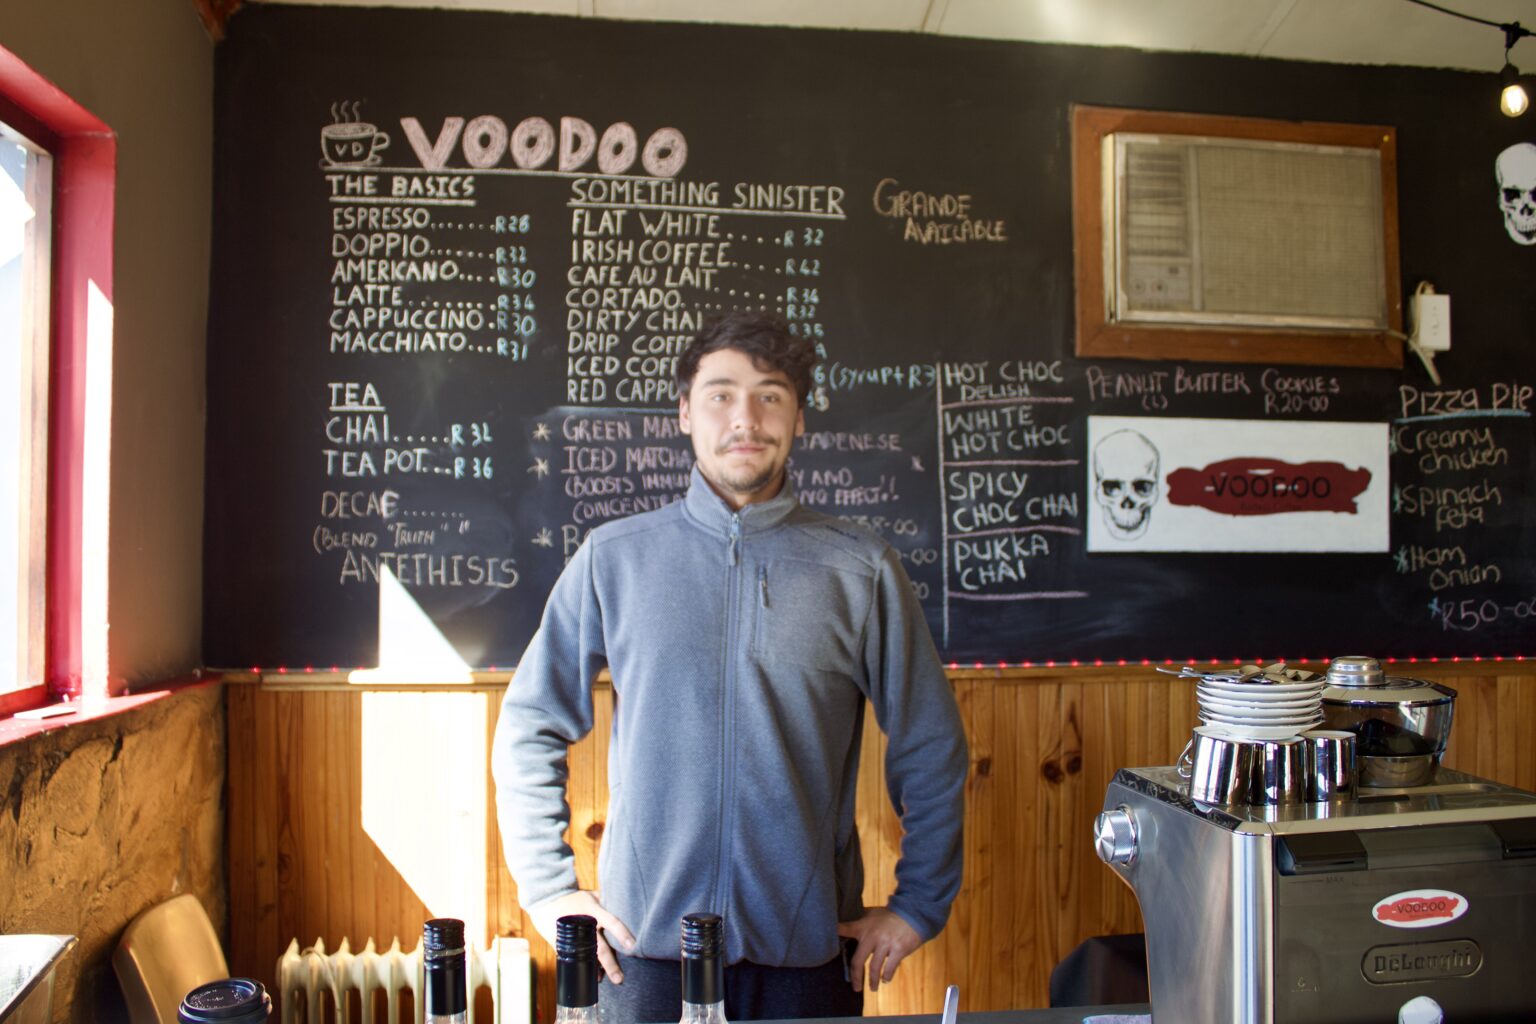 Owner of Voodoo Cafe